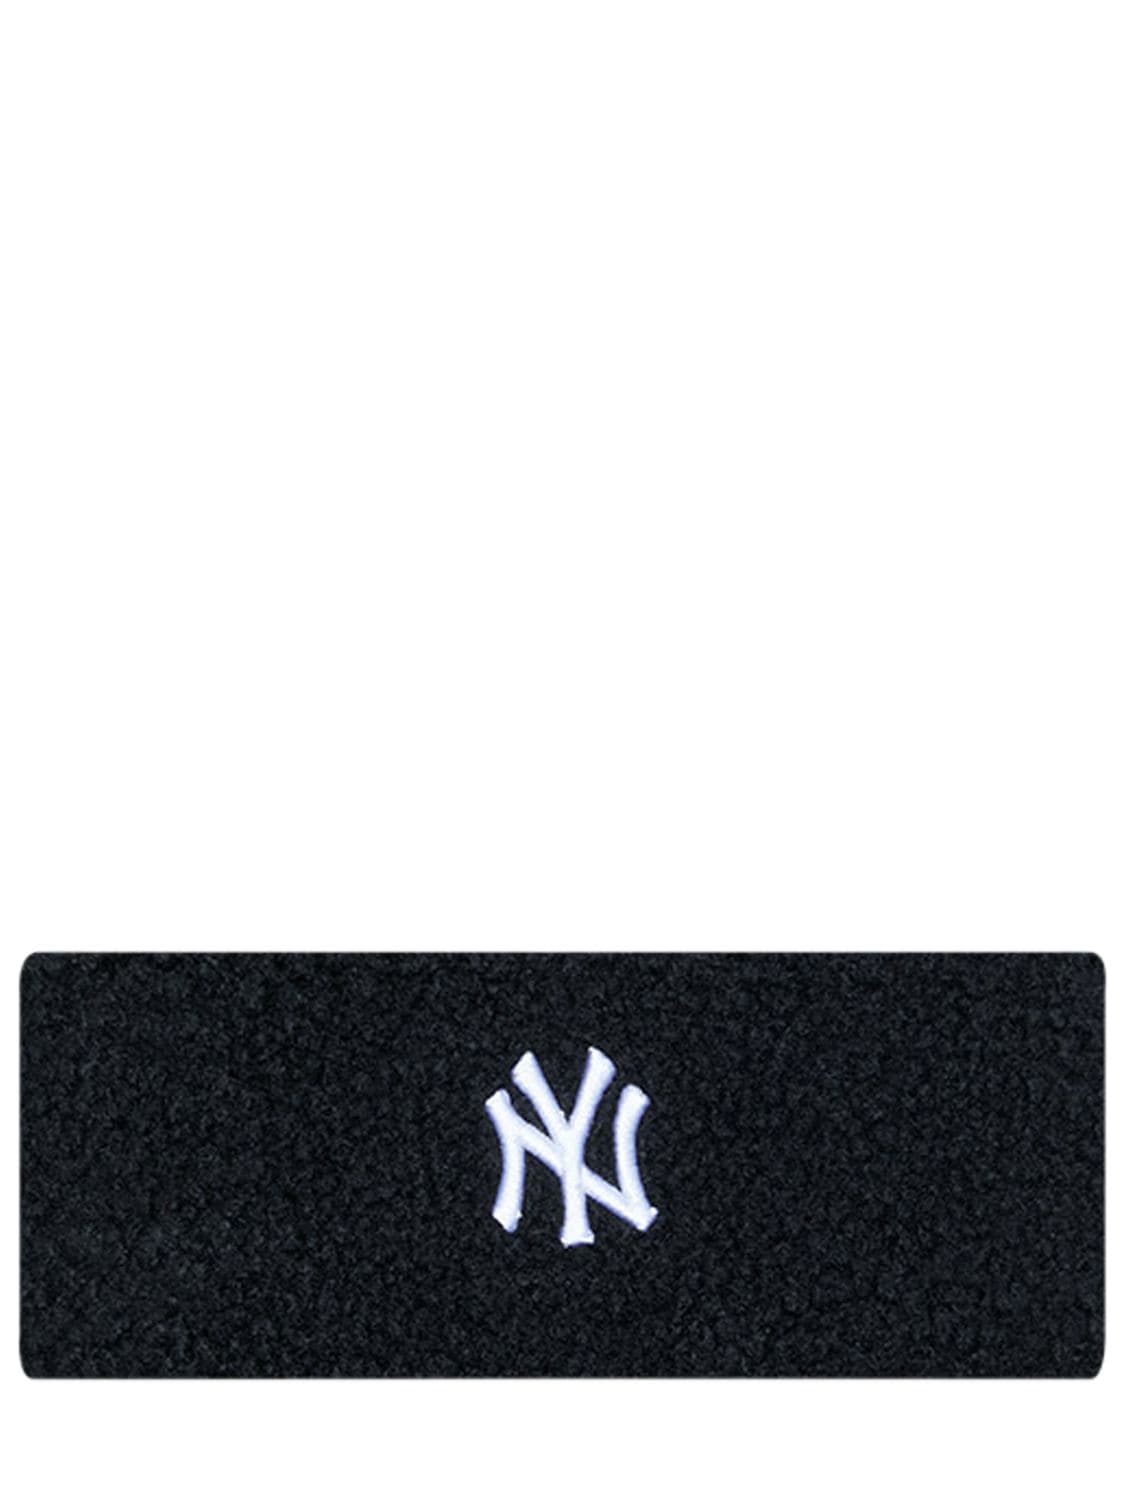 Image of New York Yankees Teddy Headband